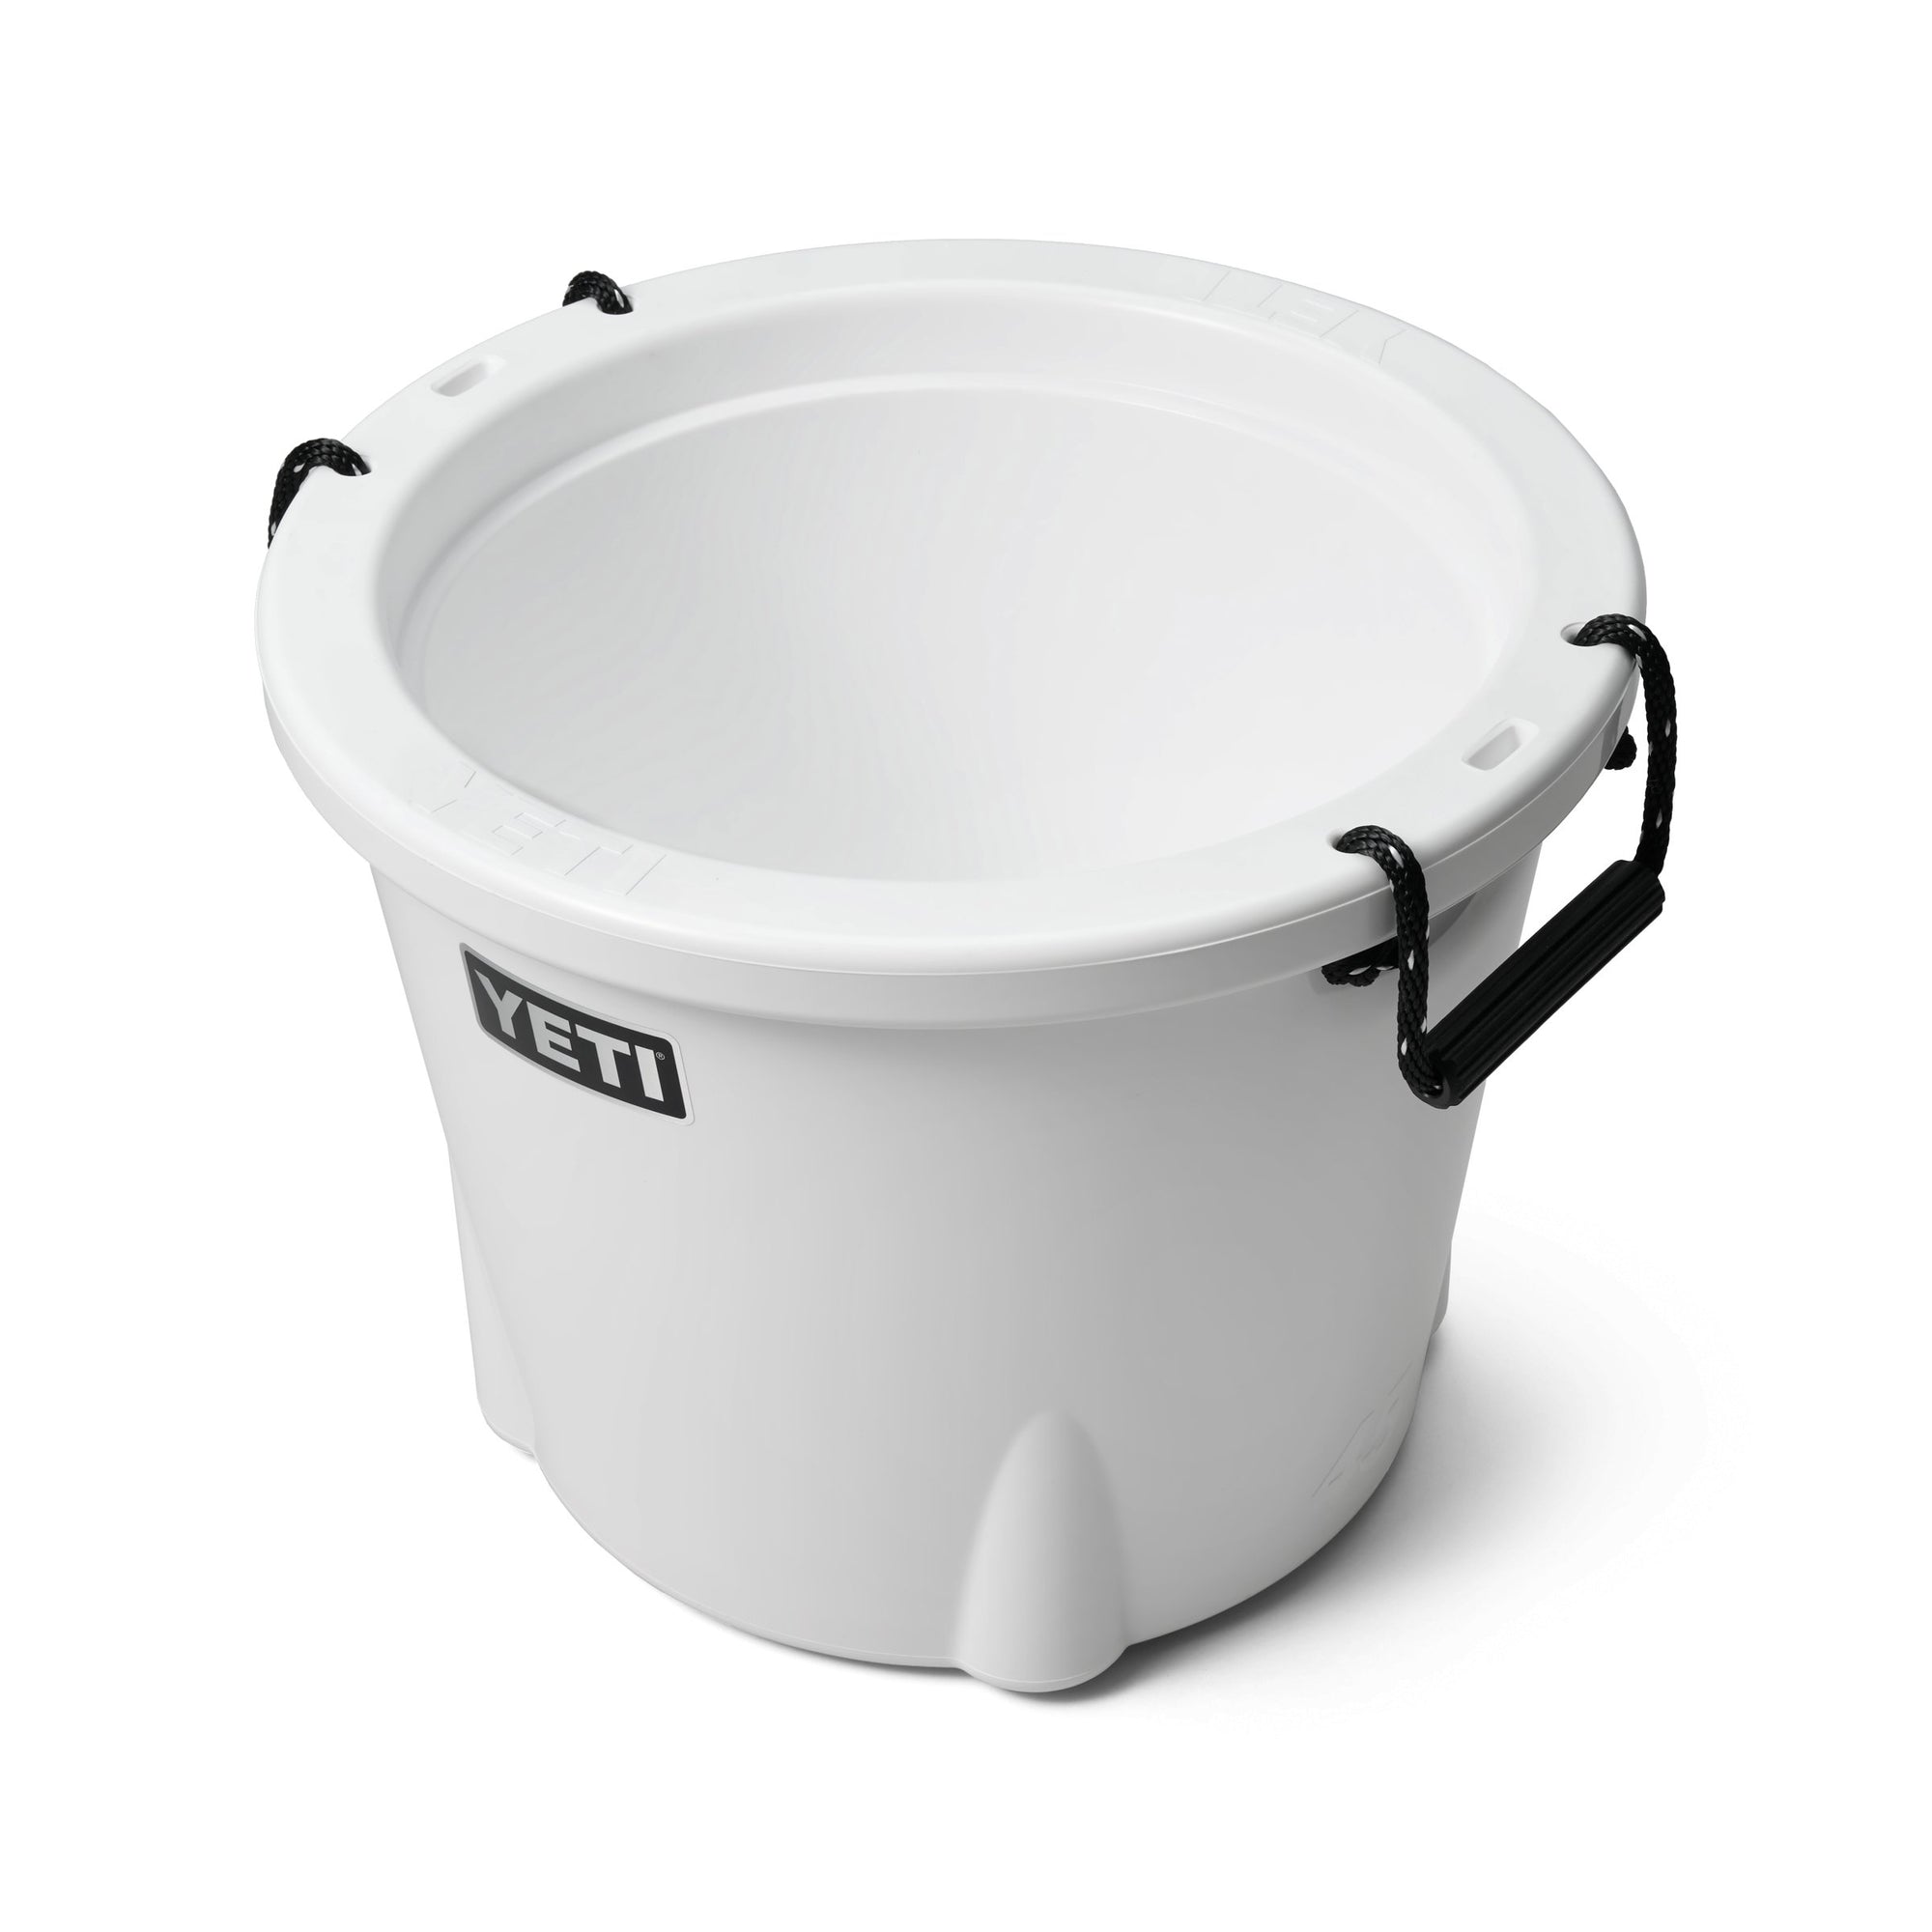 YETI® Tank 45 Insulated Ice Bucket - Blanc